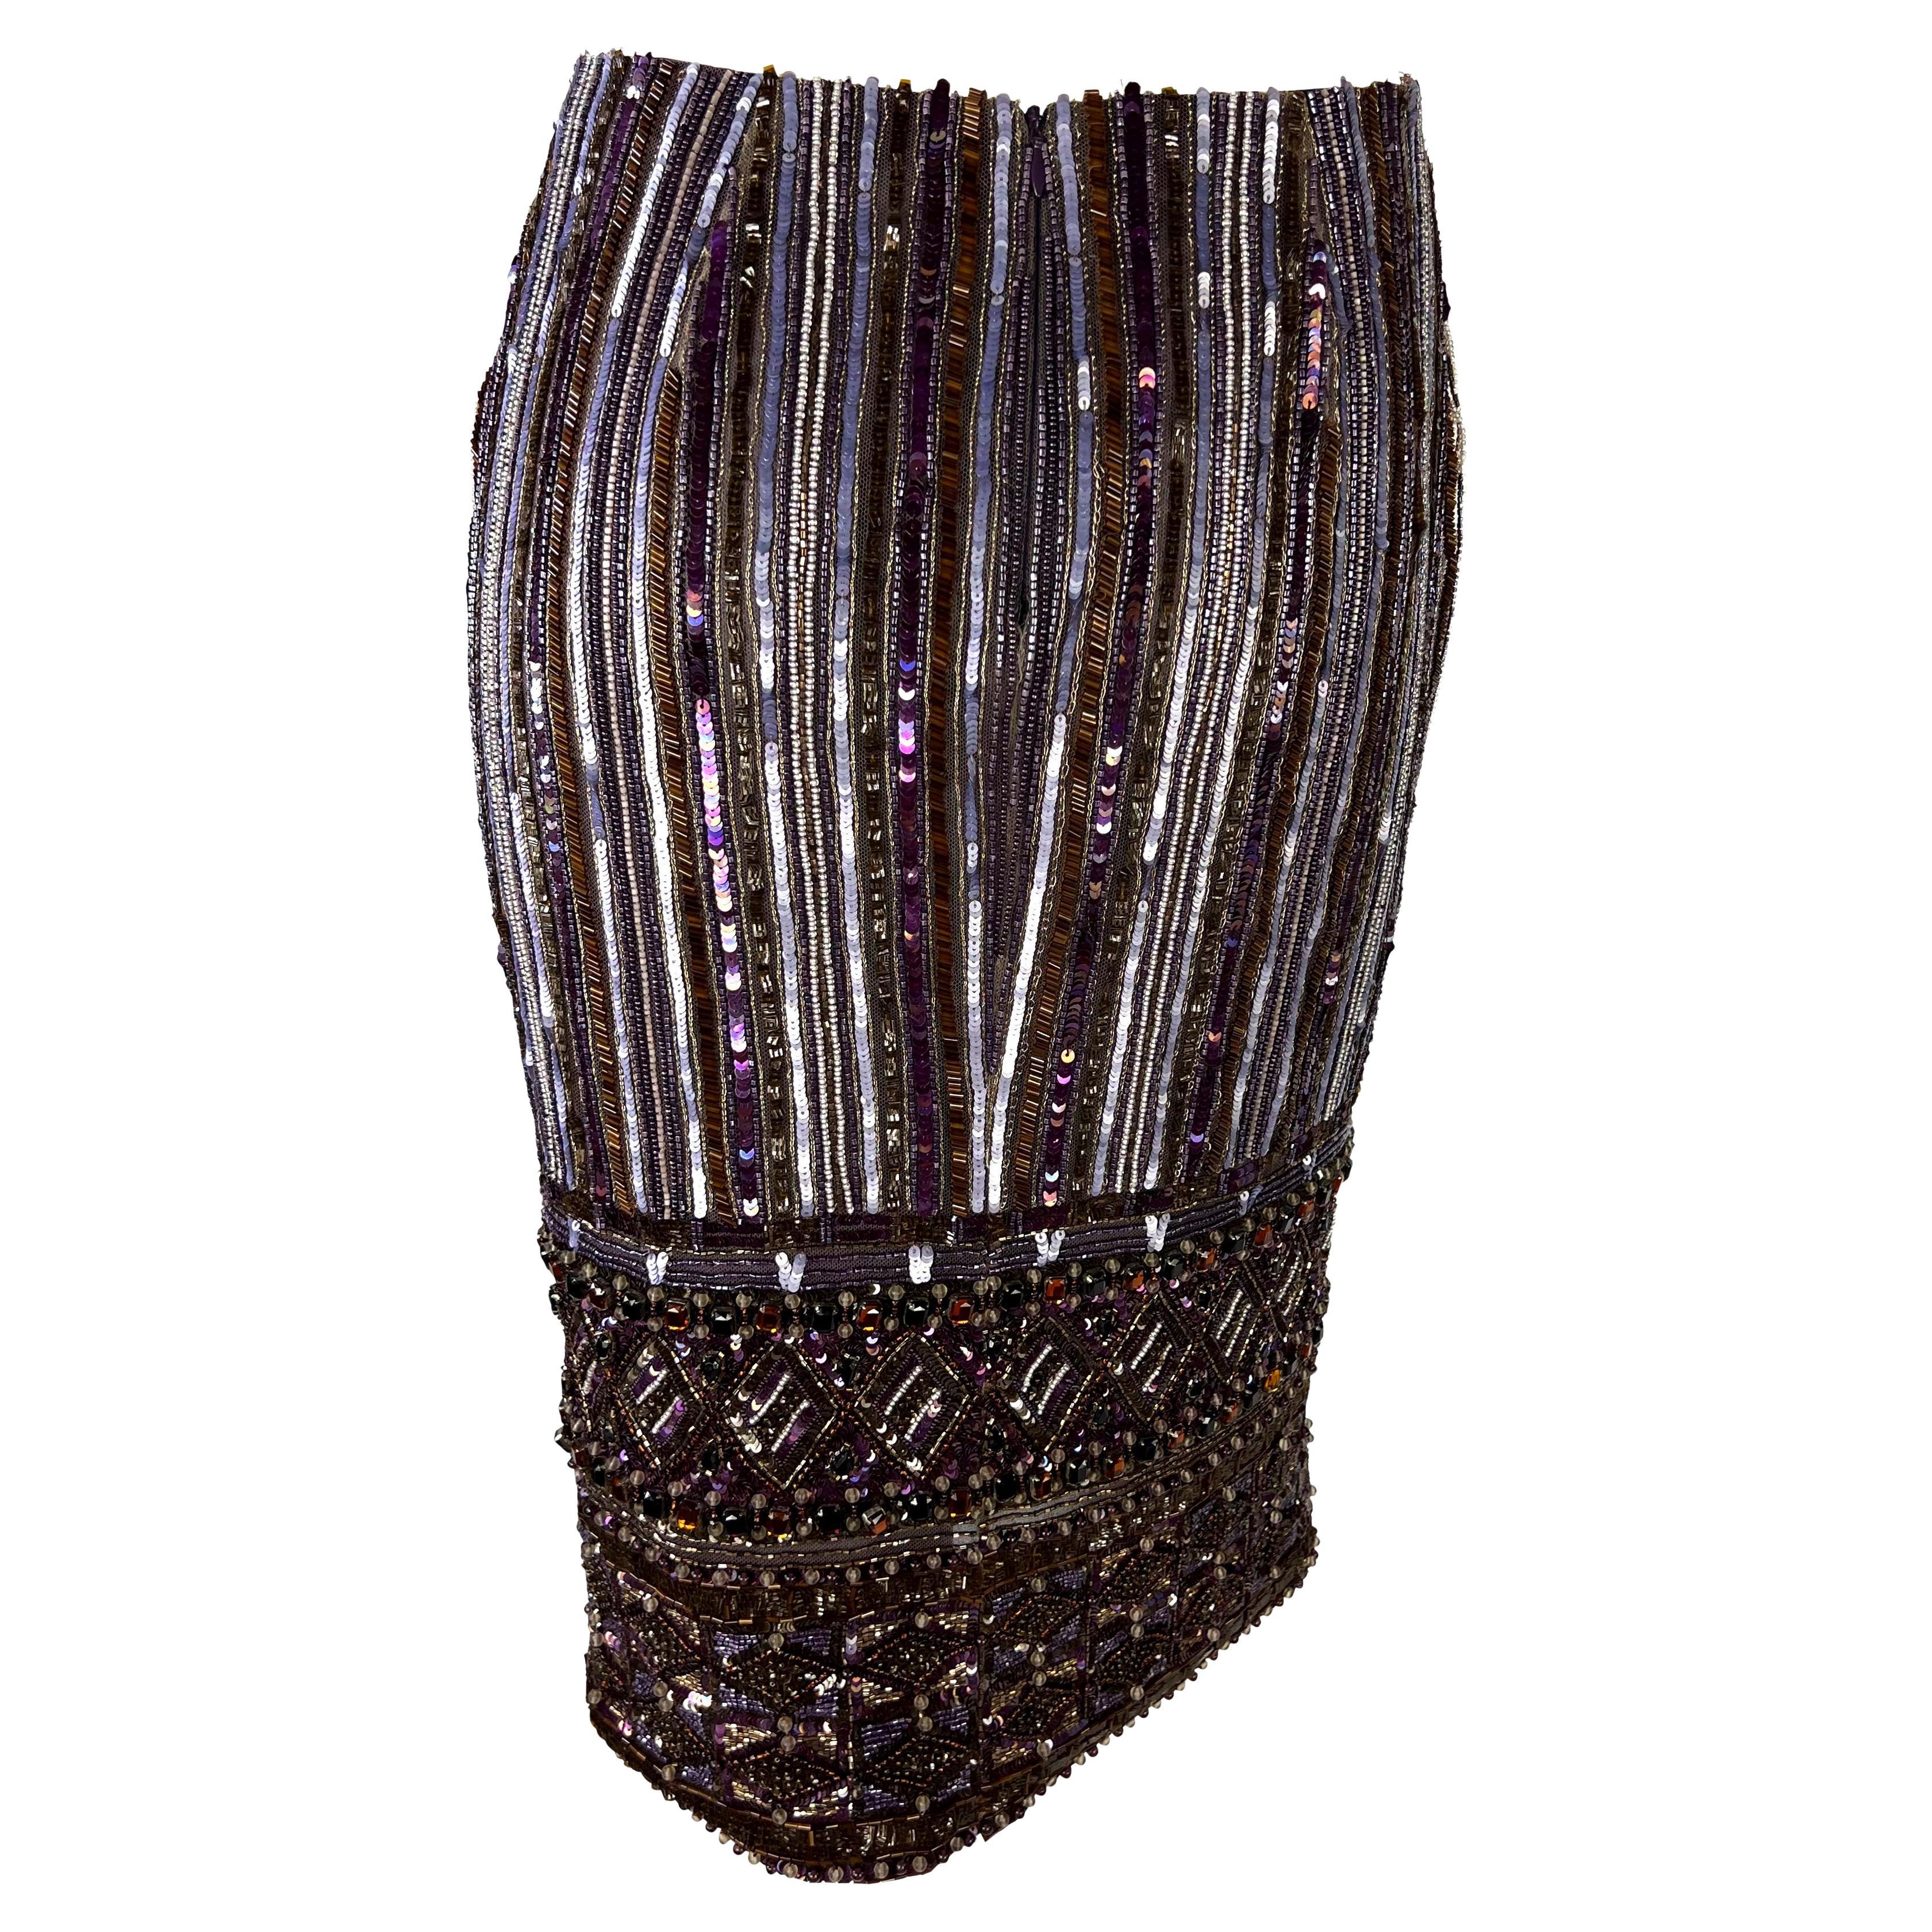 Black Early 2000s Valentino Garavani Aubergine Rhinestone Heavily Beaded Pencil Skirt For Sale